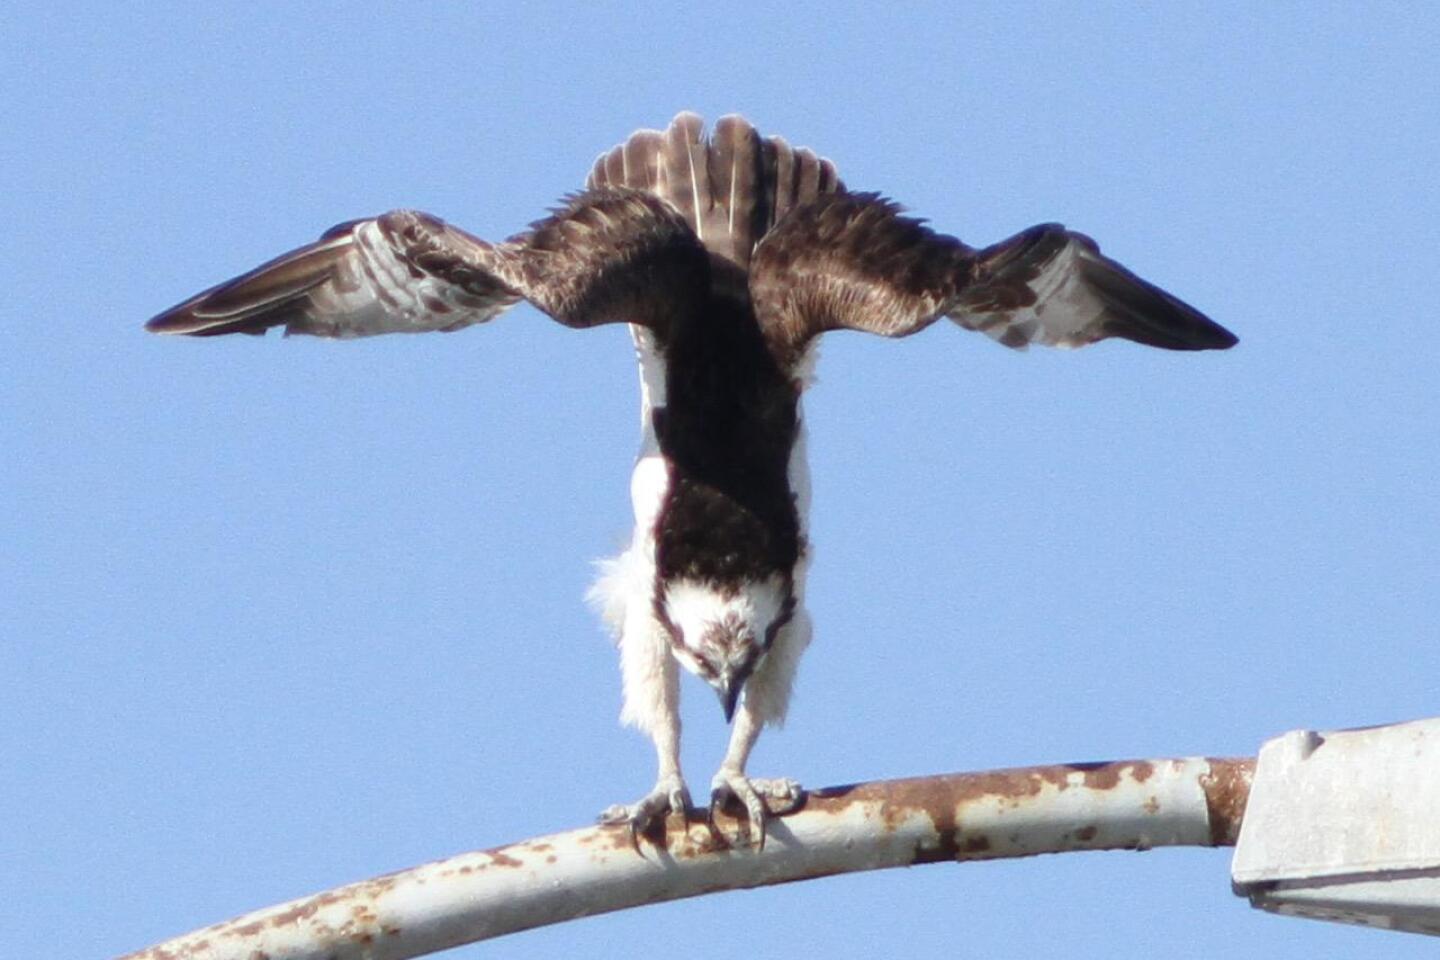 Ozzy the osprey performs some acrobatics.